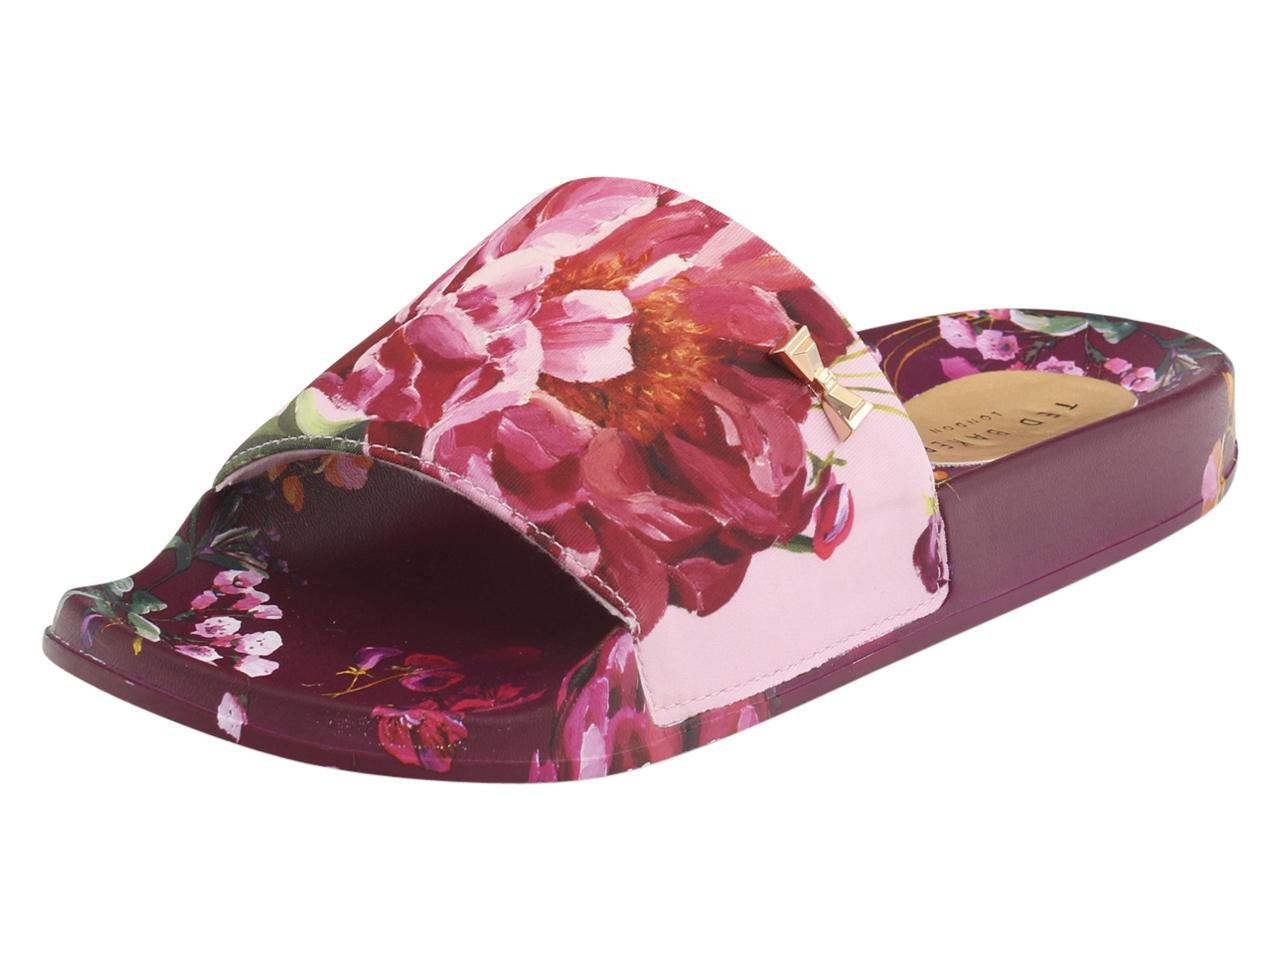 Ted Baker Women's Qarla Slides Sandals Shoes - Purple - 7 B(M) US